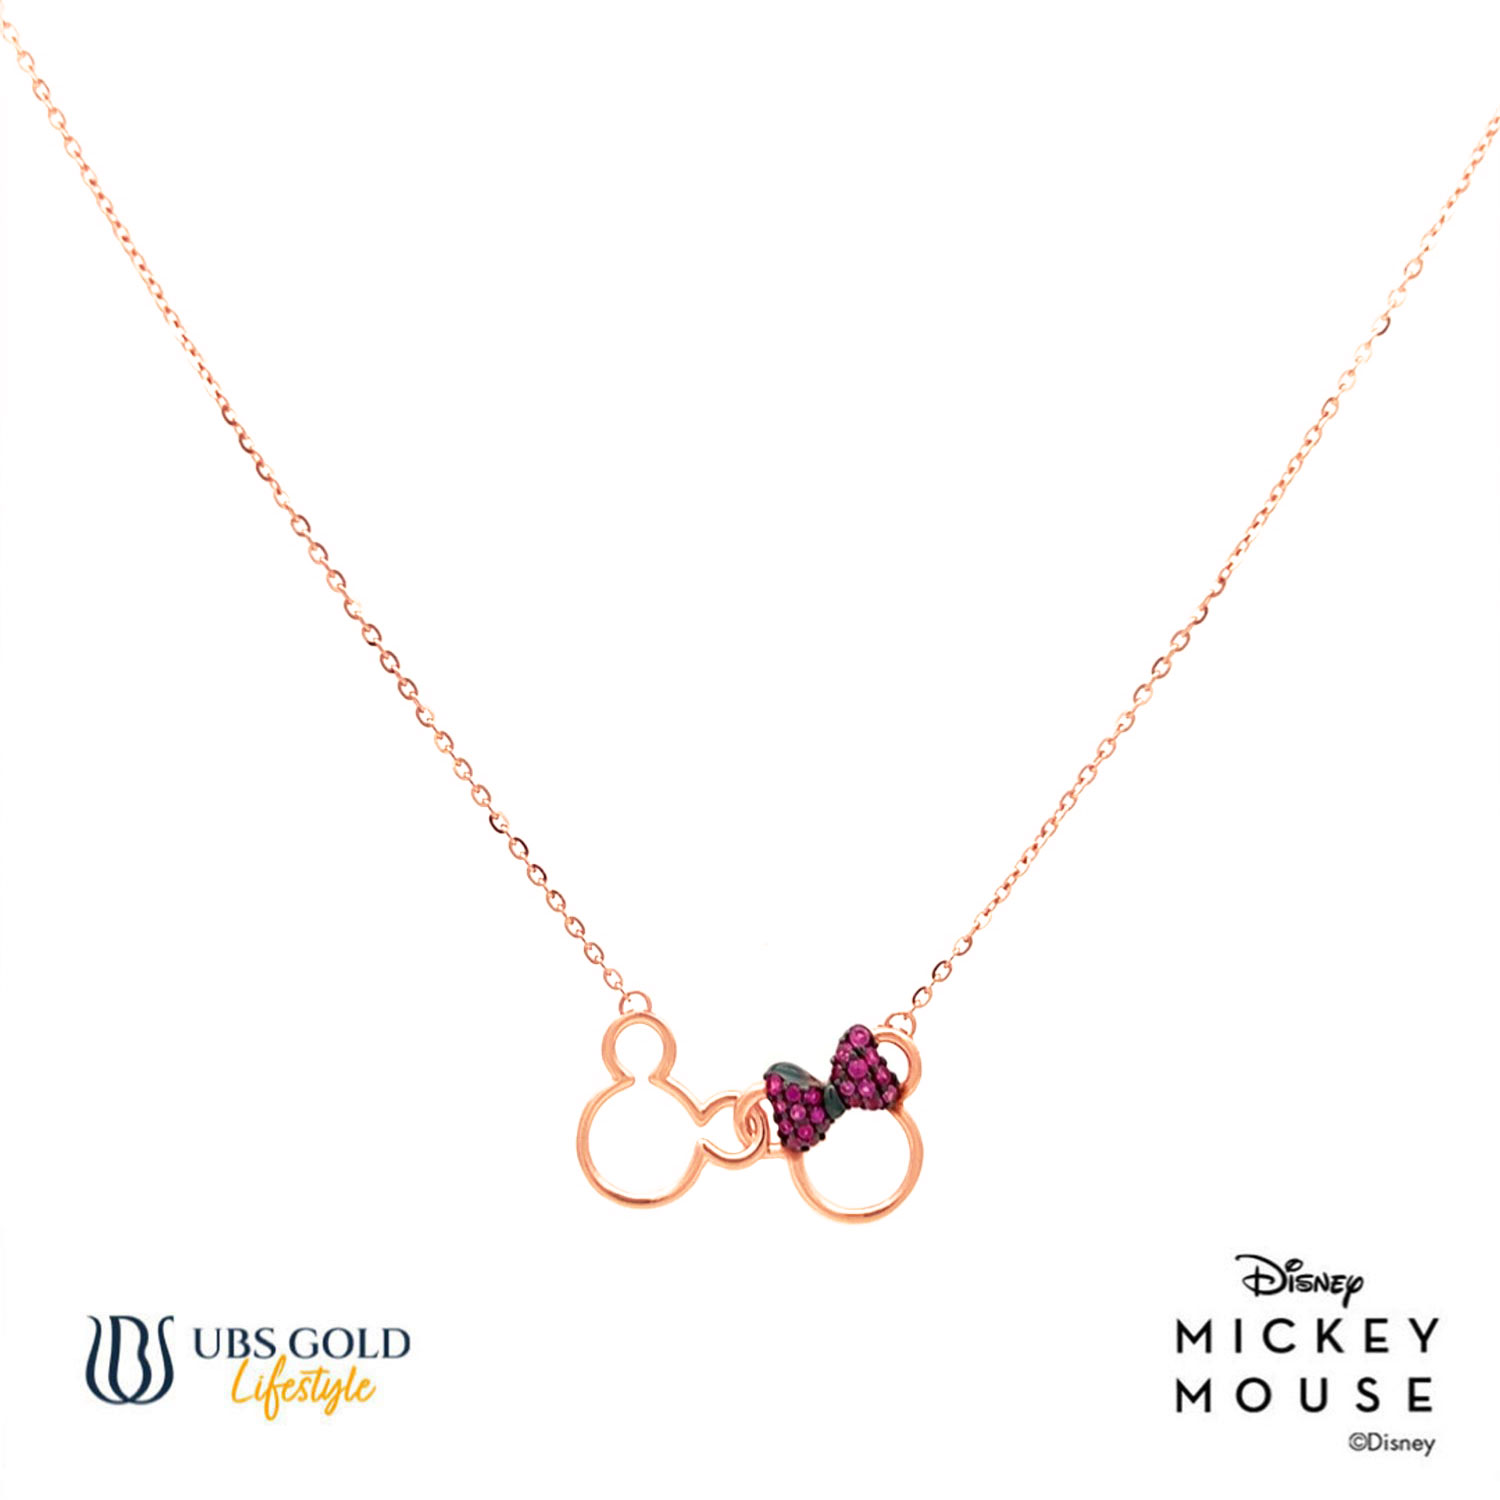 UBS Gold Kalung Emas Disney Mickey Minnie Mouse - Kky0500 - 17K